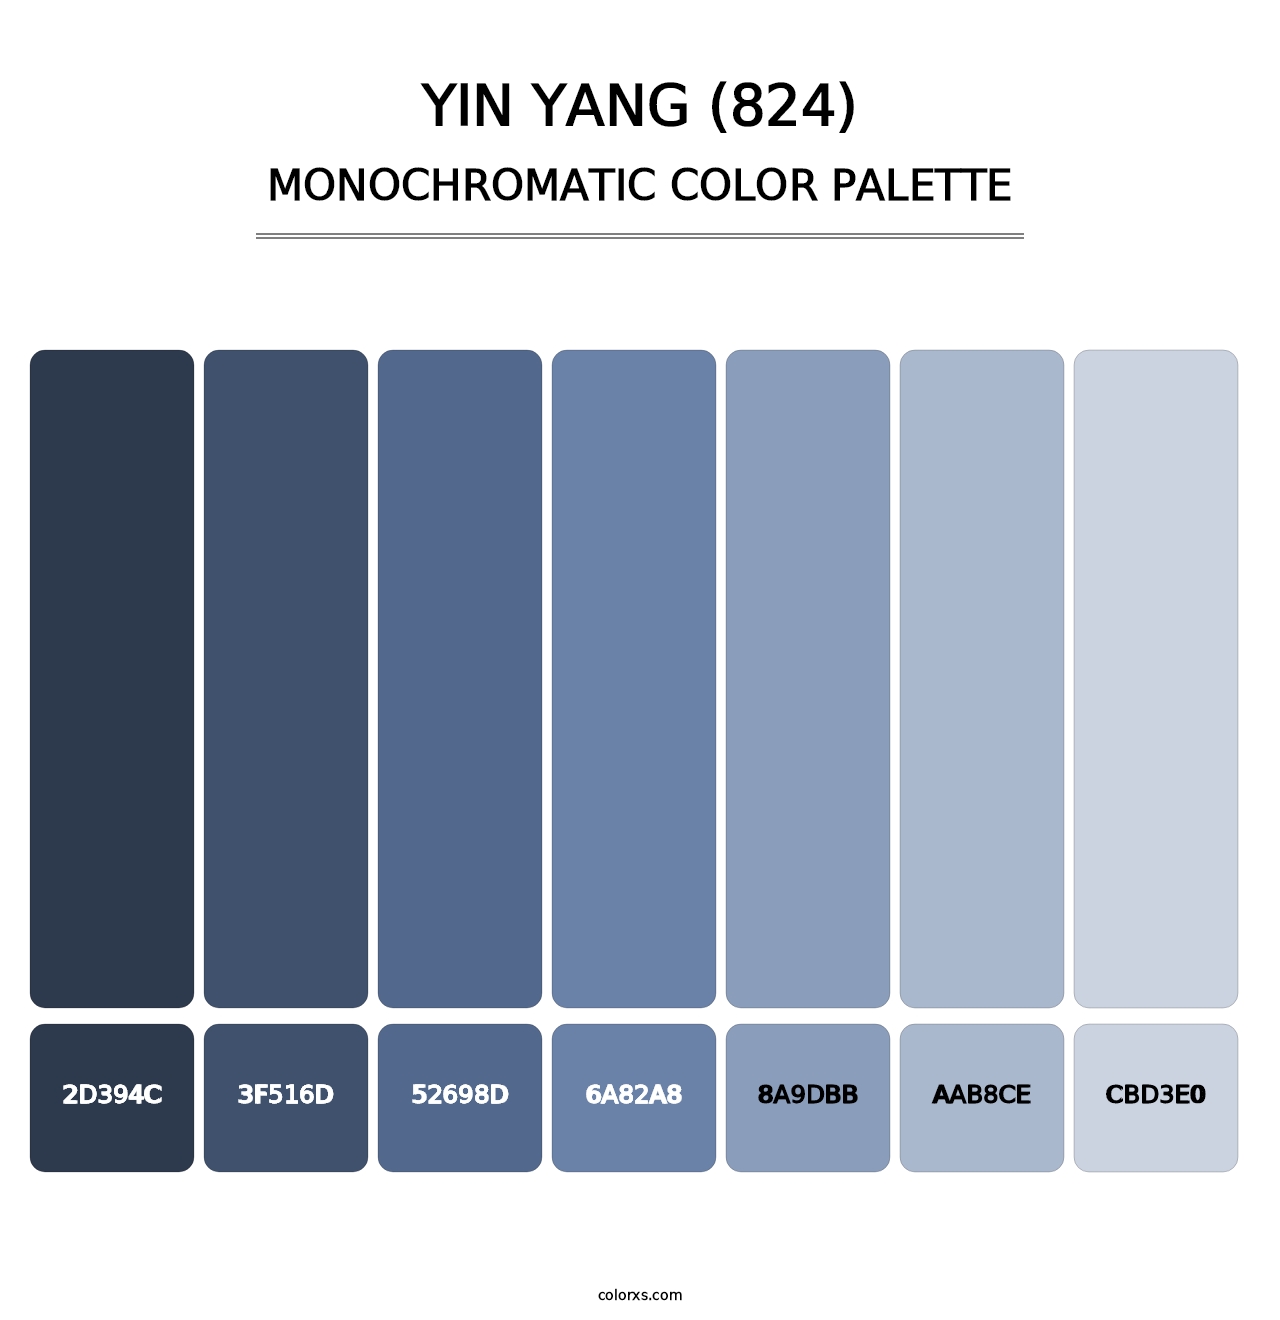 Yin Yang (824) - Monochromatic Color Palette